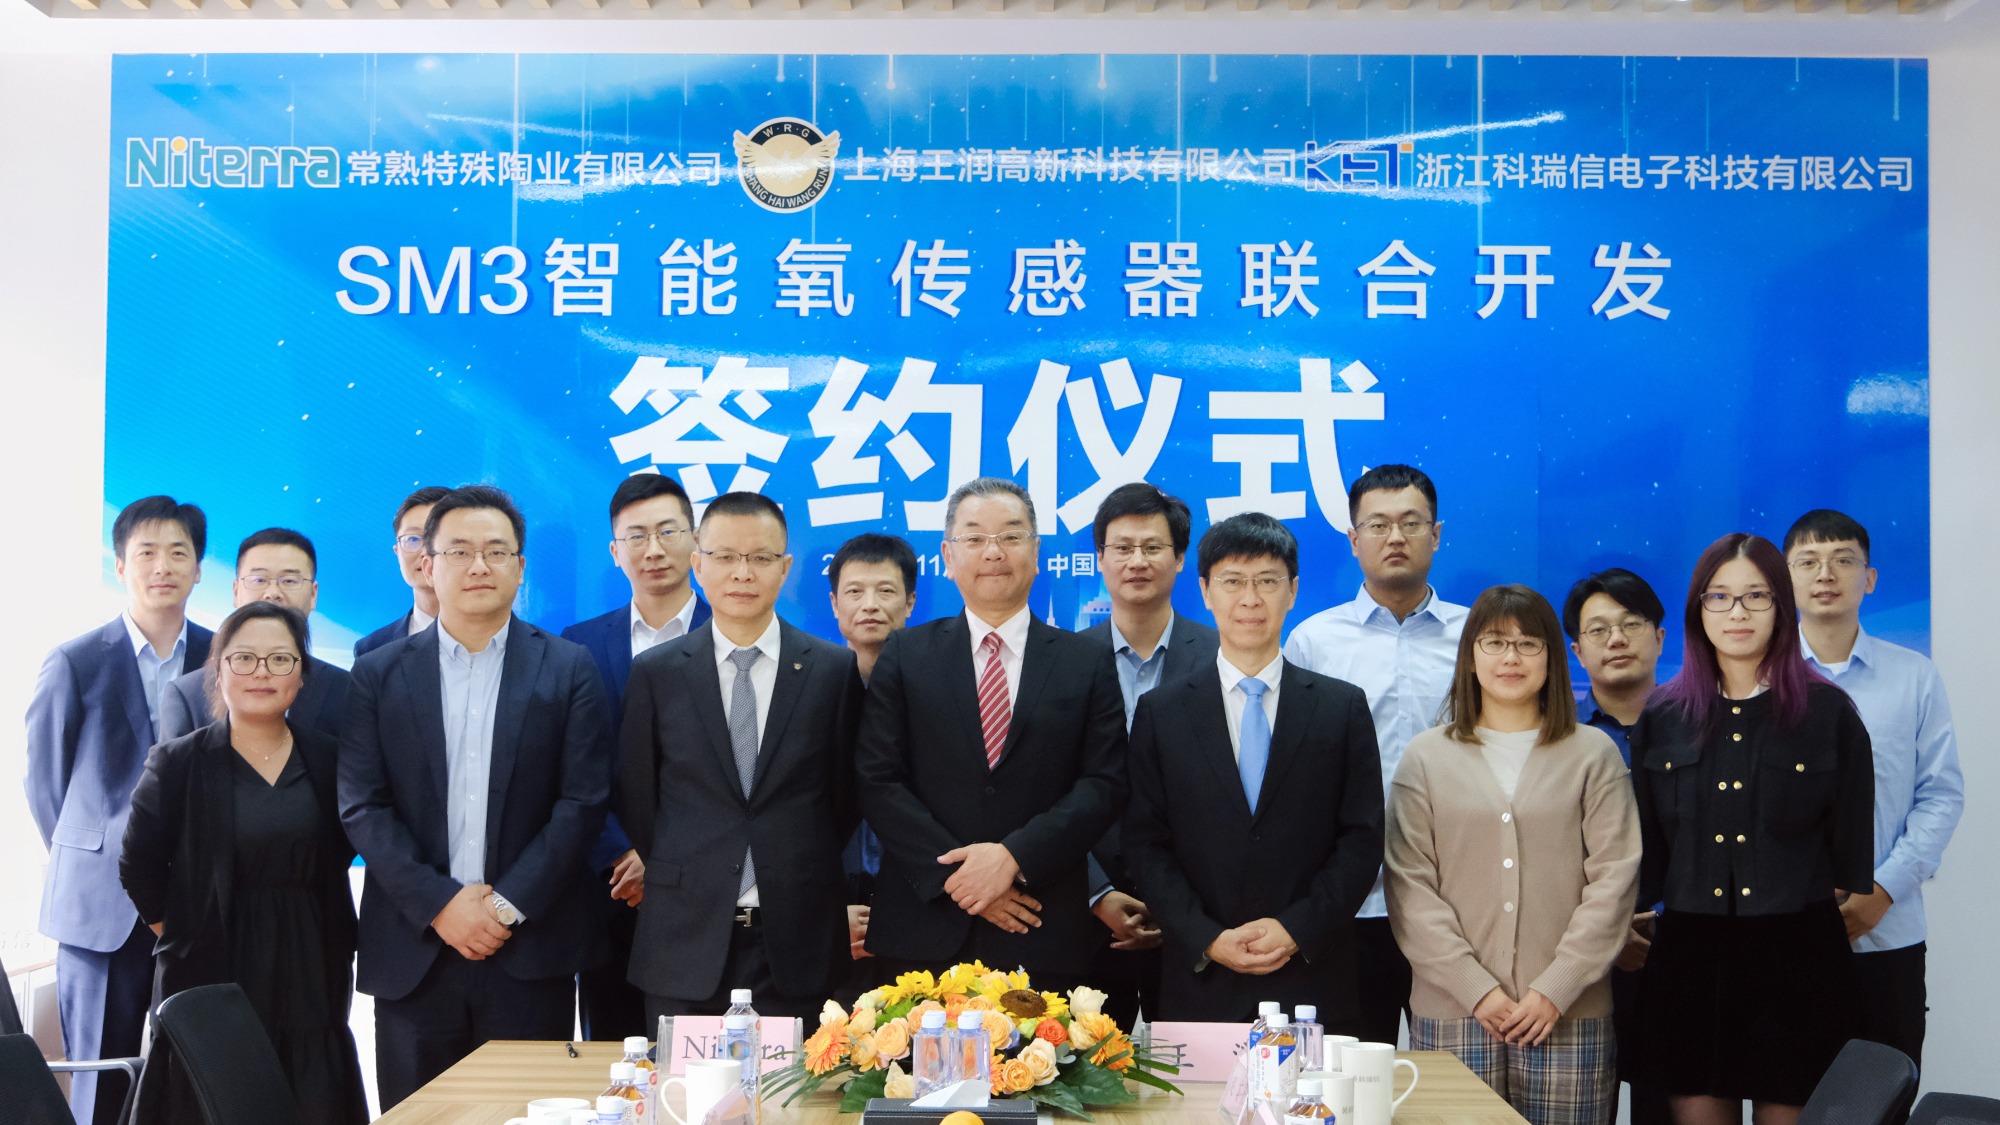 Niterra, Wang Run, and Kreation jointly develop the SM3 intelligent oxygen sensor